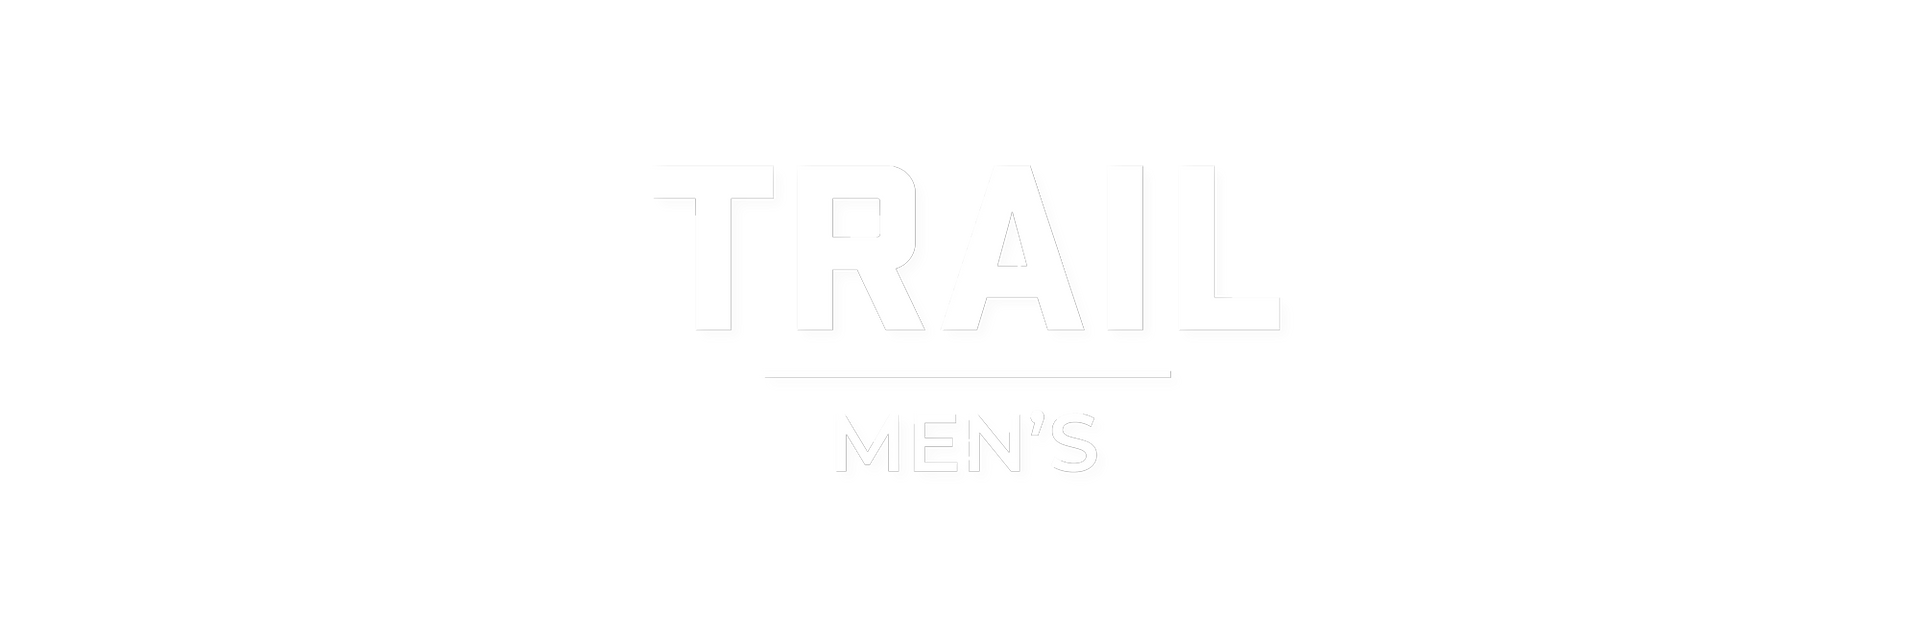 Men's Trail  Header Image Text Overlay